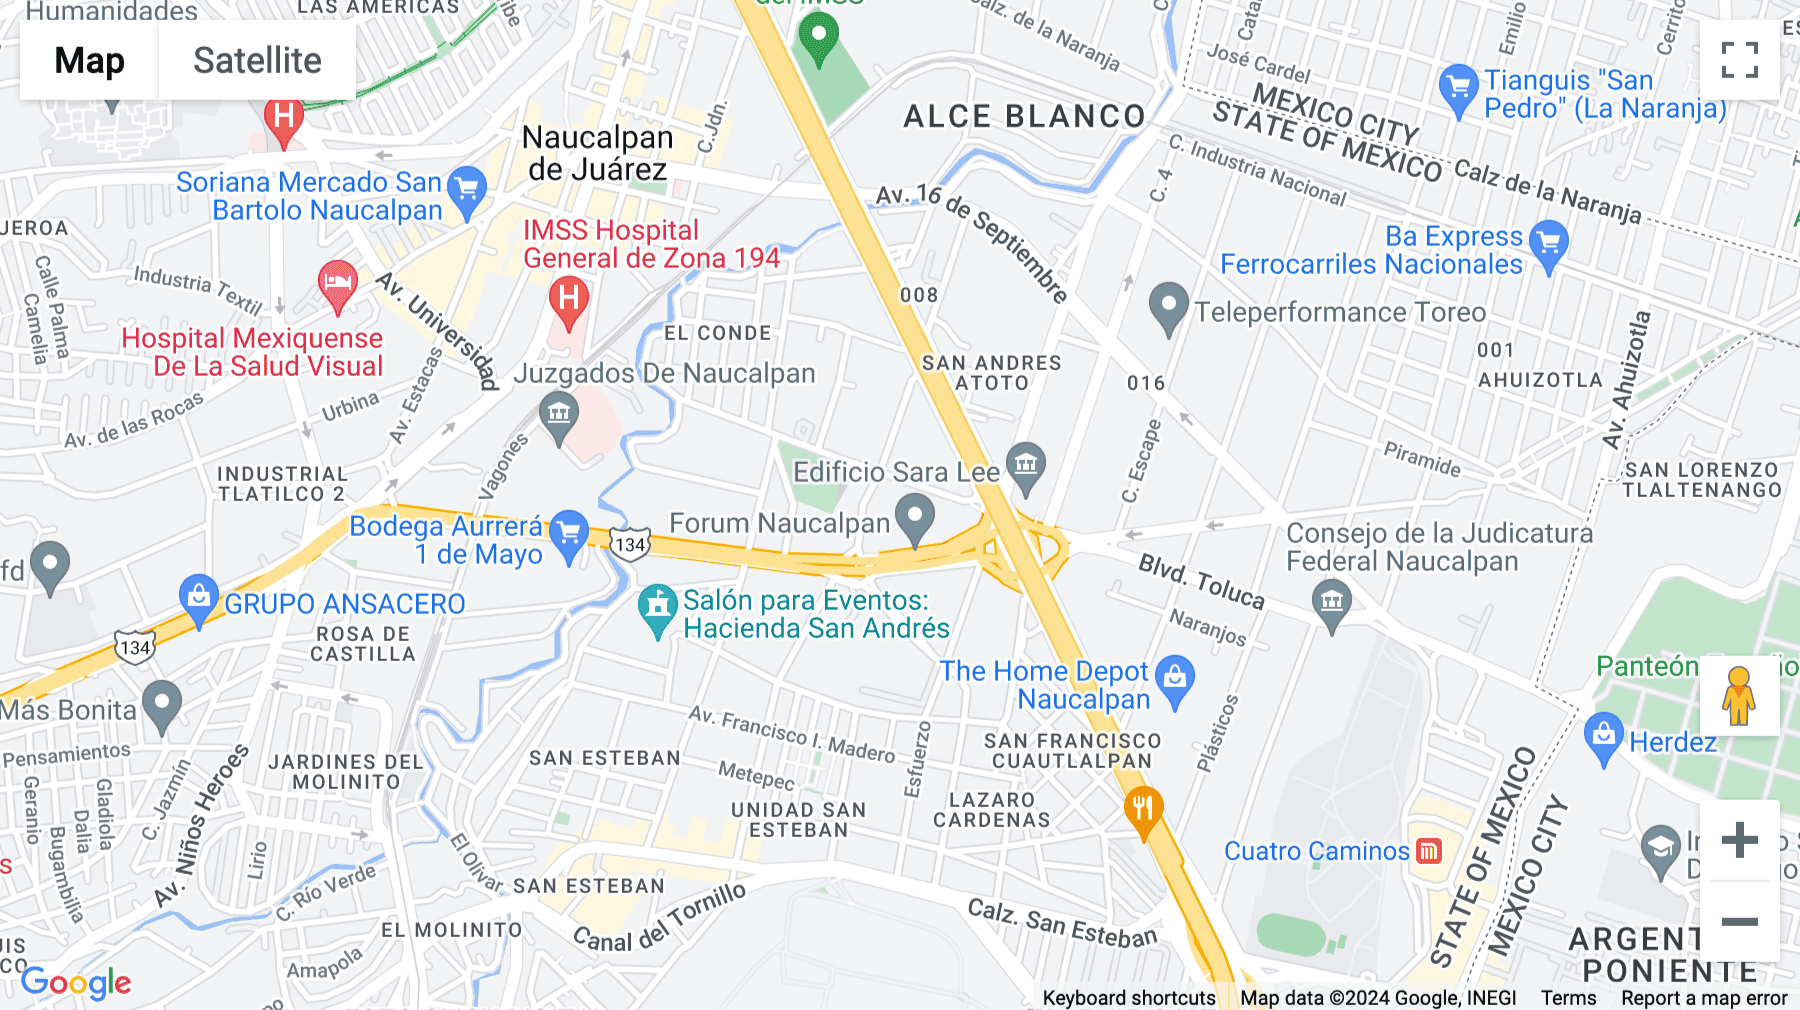 Click for interative map of Av. 1 de mayo 120, San Andres Atoto, Forum Naucalpan. Piso 2, Mexico City